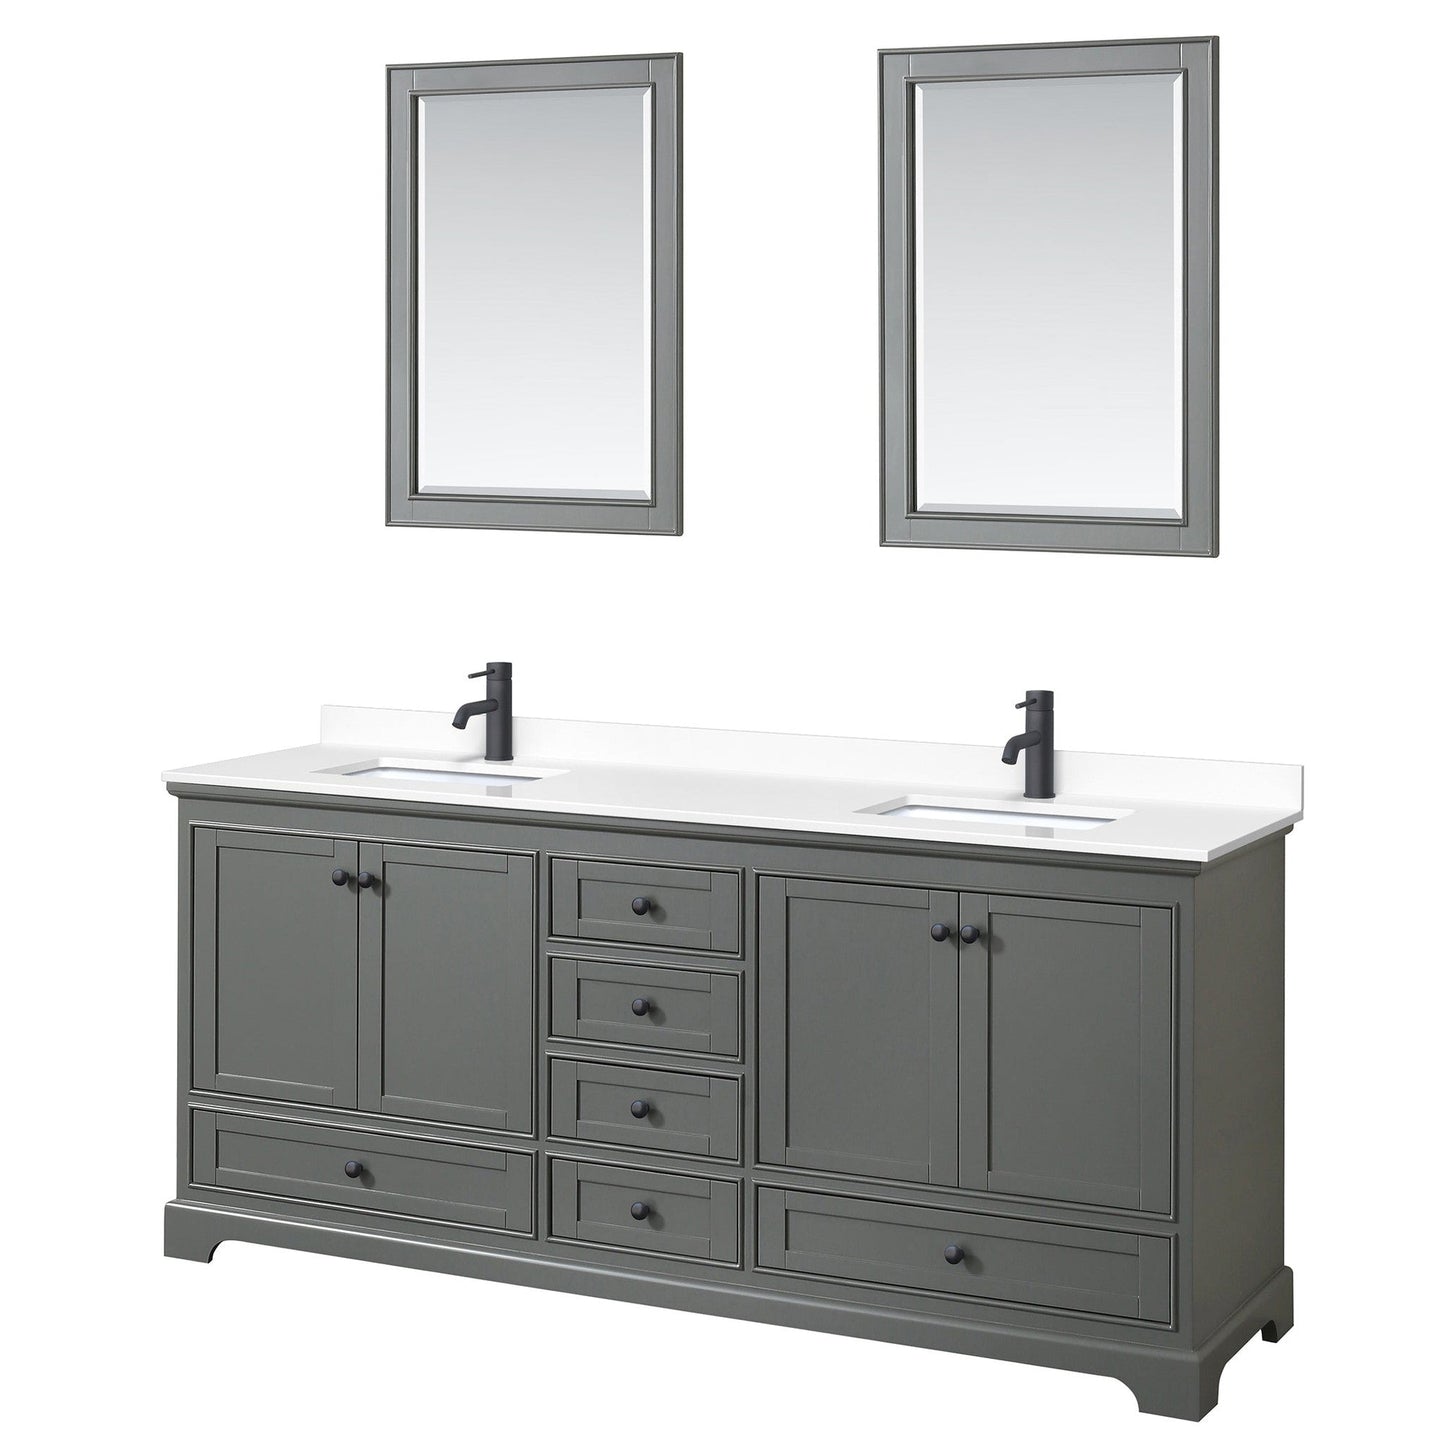 Deborah 80" Double Bathroom Vanity in Dark Gray, White Cultured Marble Countertop, Undermount Square Sinks, Matte Black Trim, 24" Mirrors